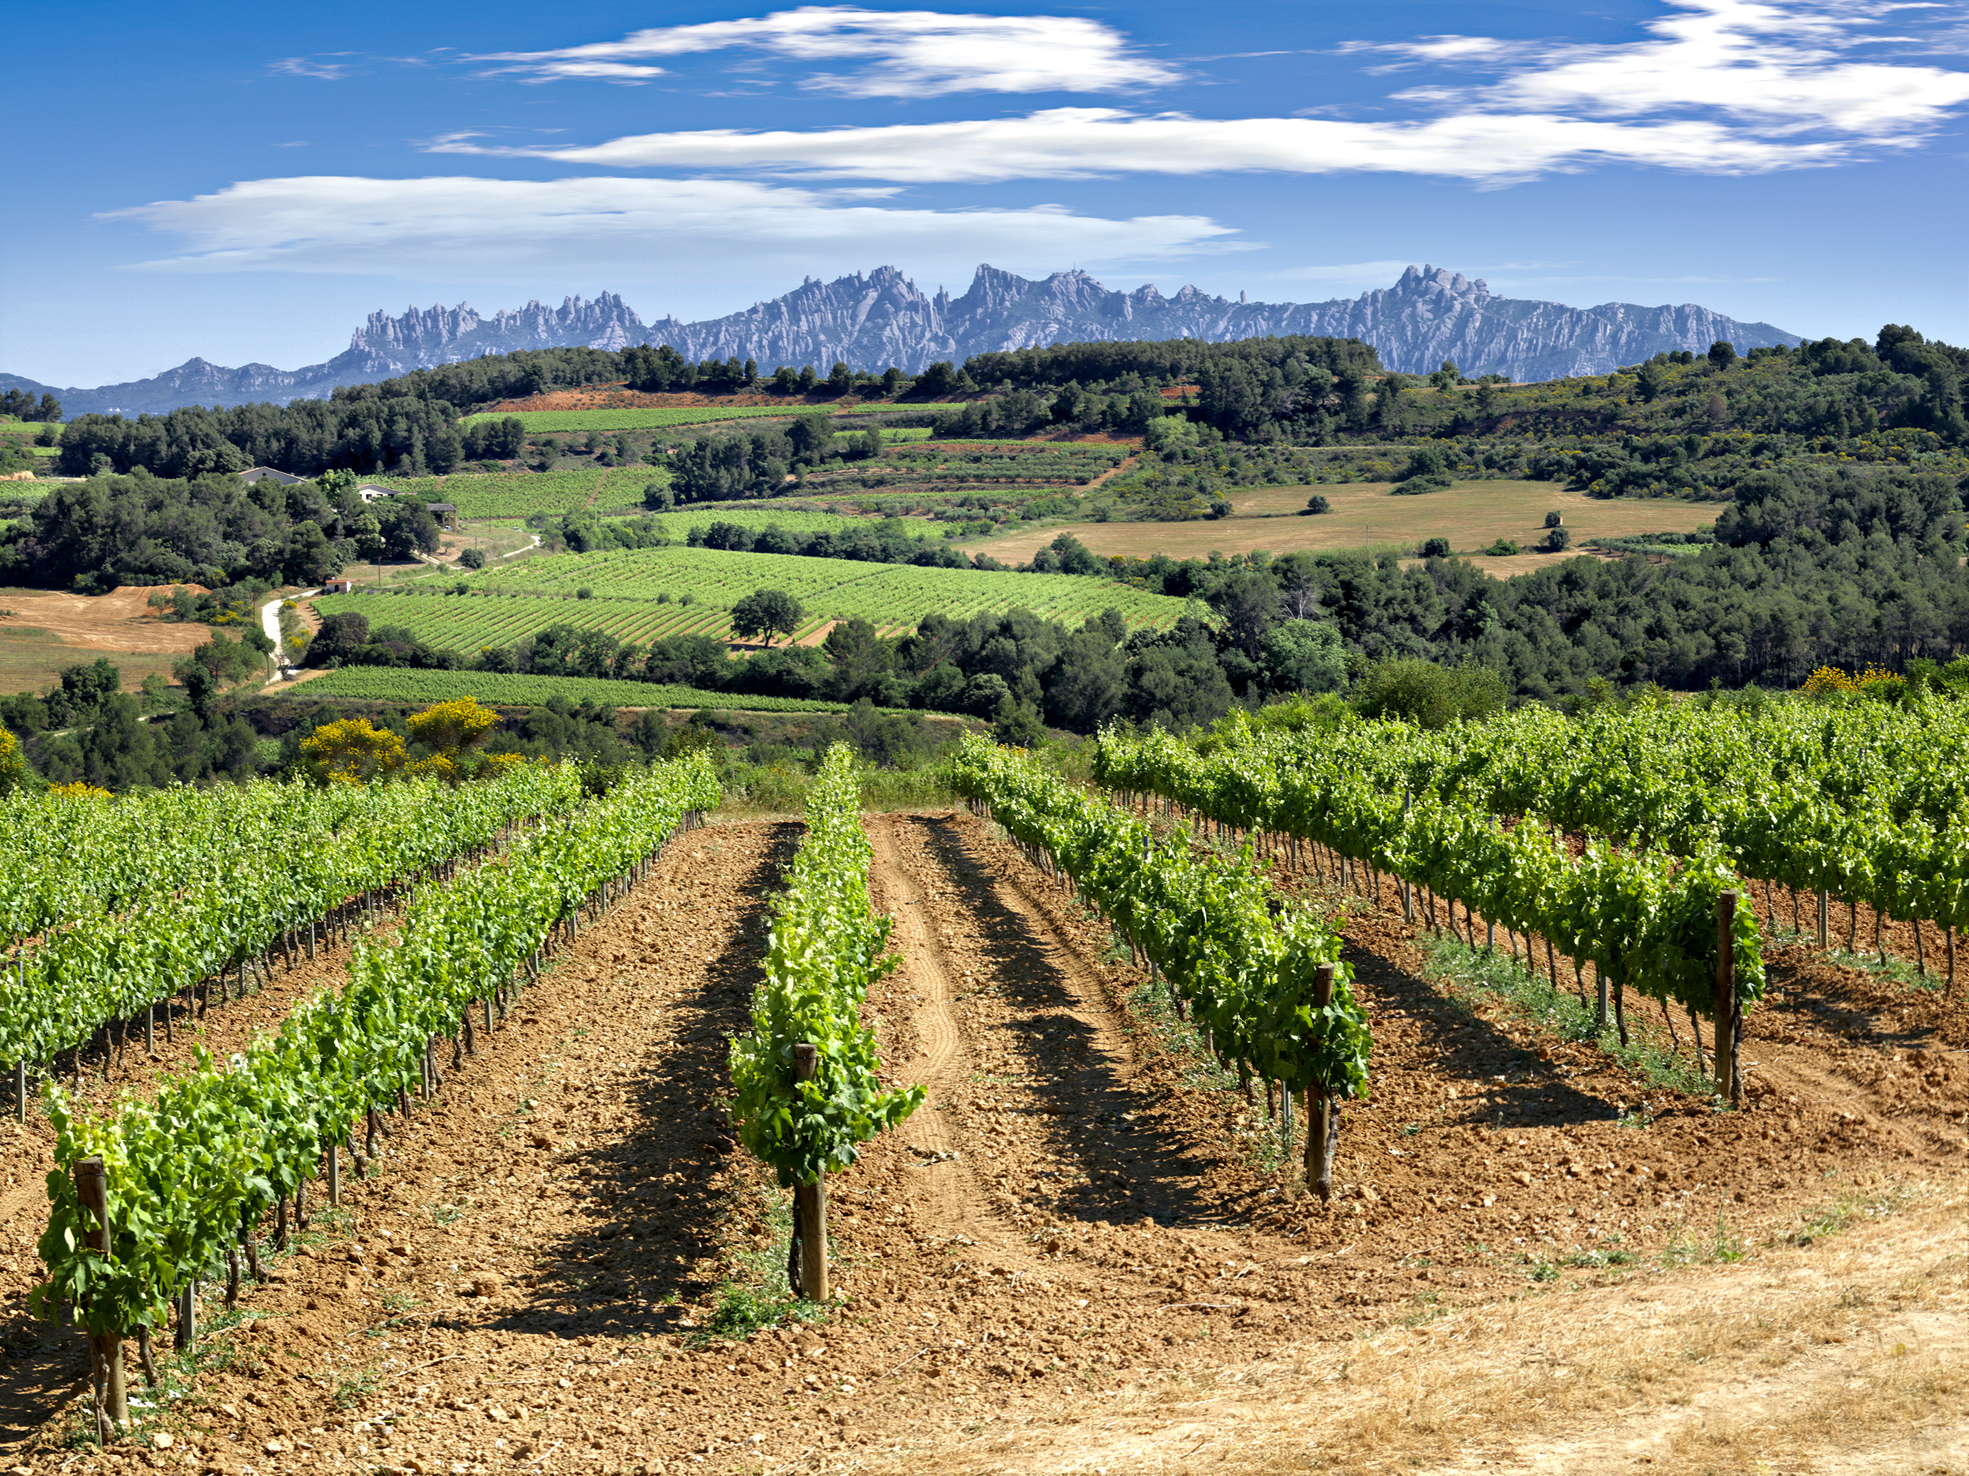 Vinyes on creixen vins catalans